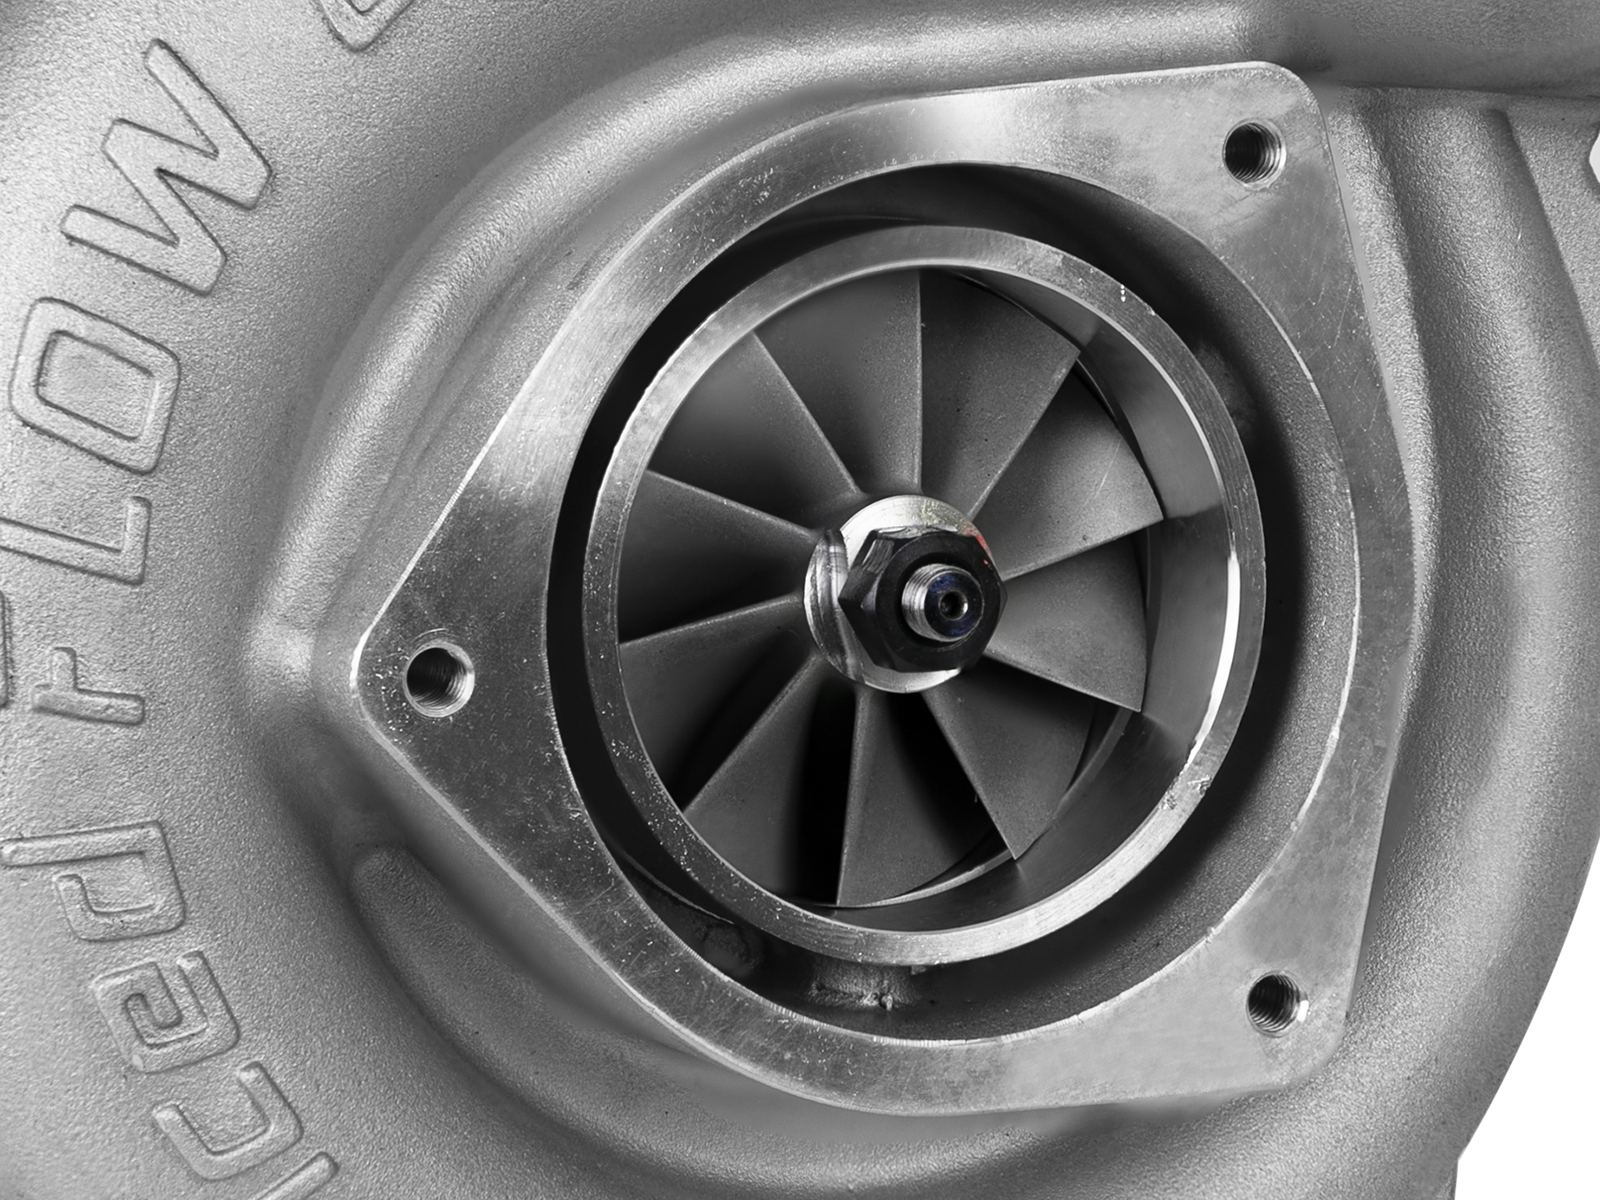 Afe Power Bladerunner 46 60100 Fits/For Gm Diesel Trucks Turbocharger (Street Fits select: 2001-2004 CHEVROLET SILVERADO, 2001-2004 GMC SIERRA - image 5 of 5